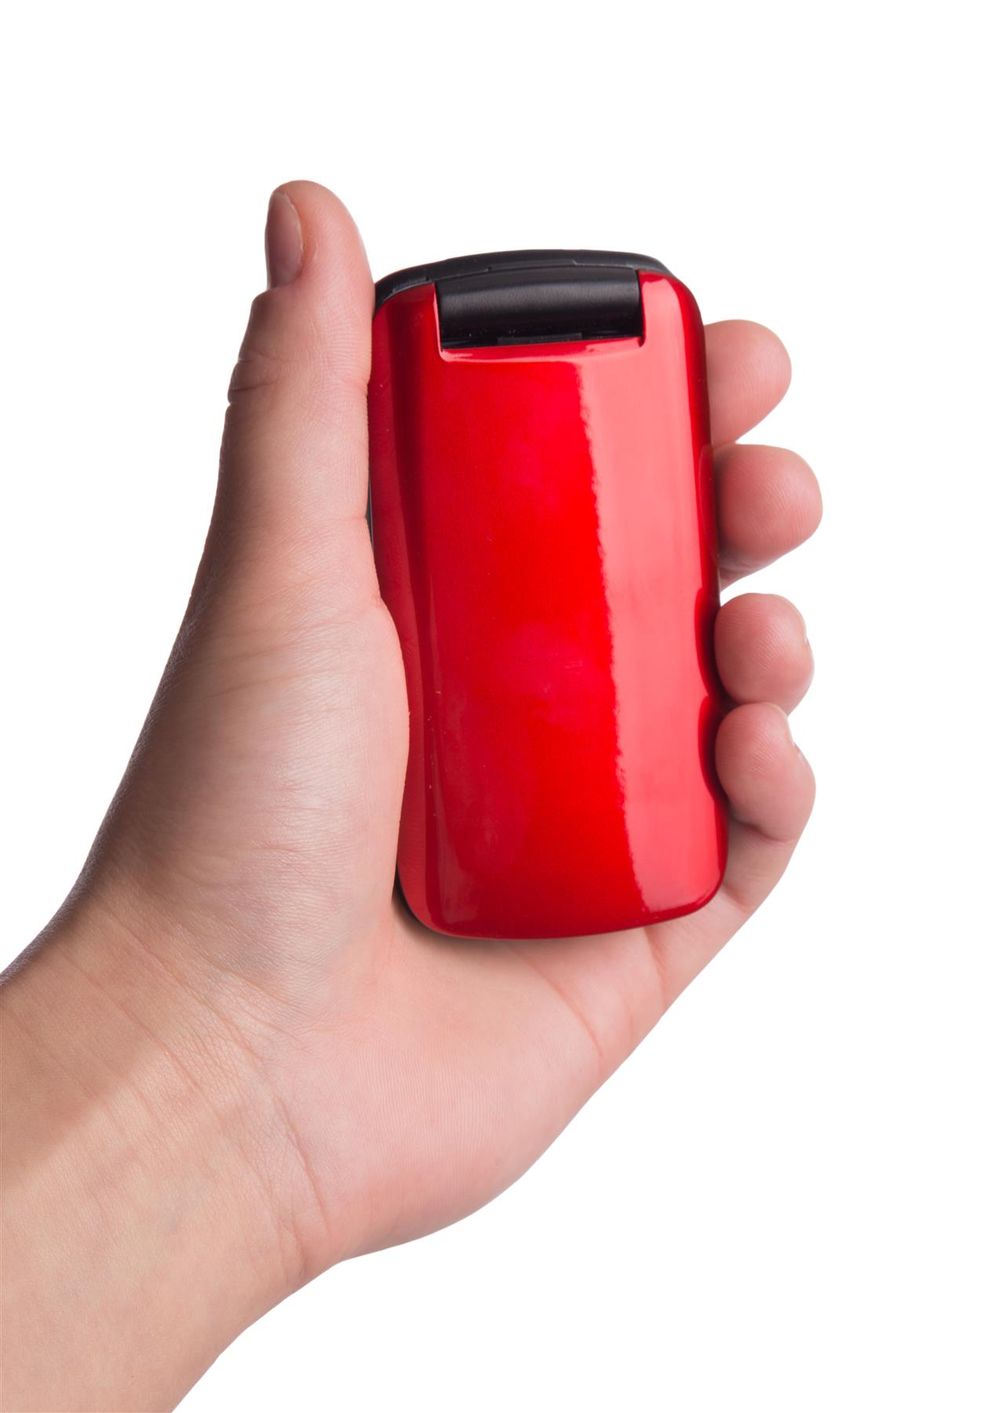 TTfone Star Big Button Flip Mobile Phone in Red with Nylon Case & Vodafone Sim